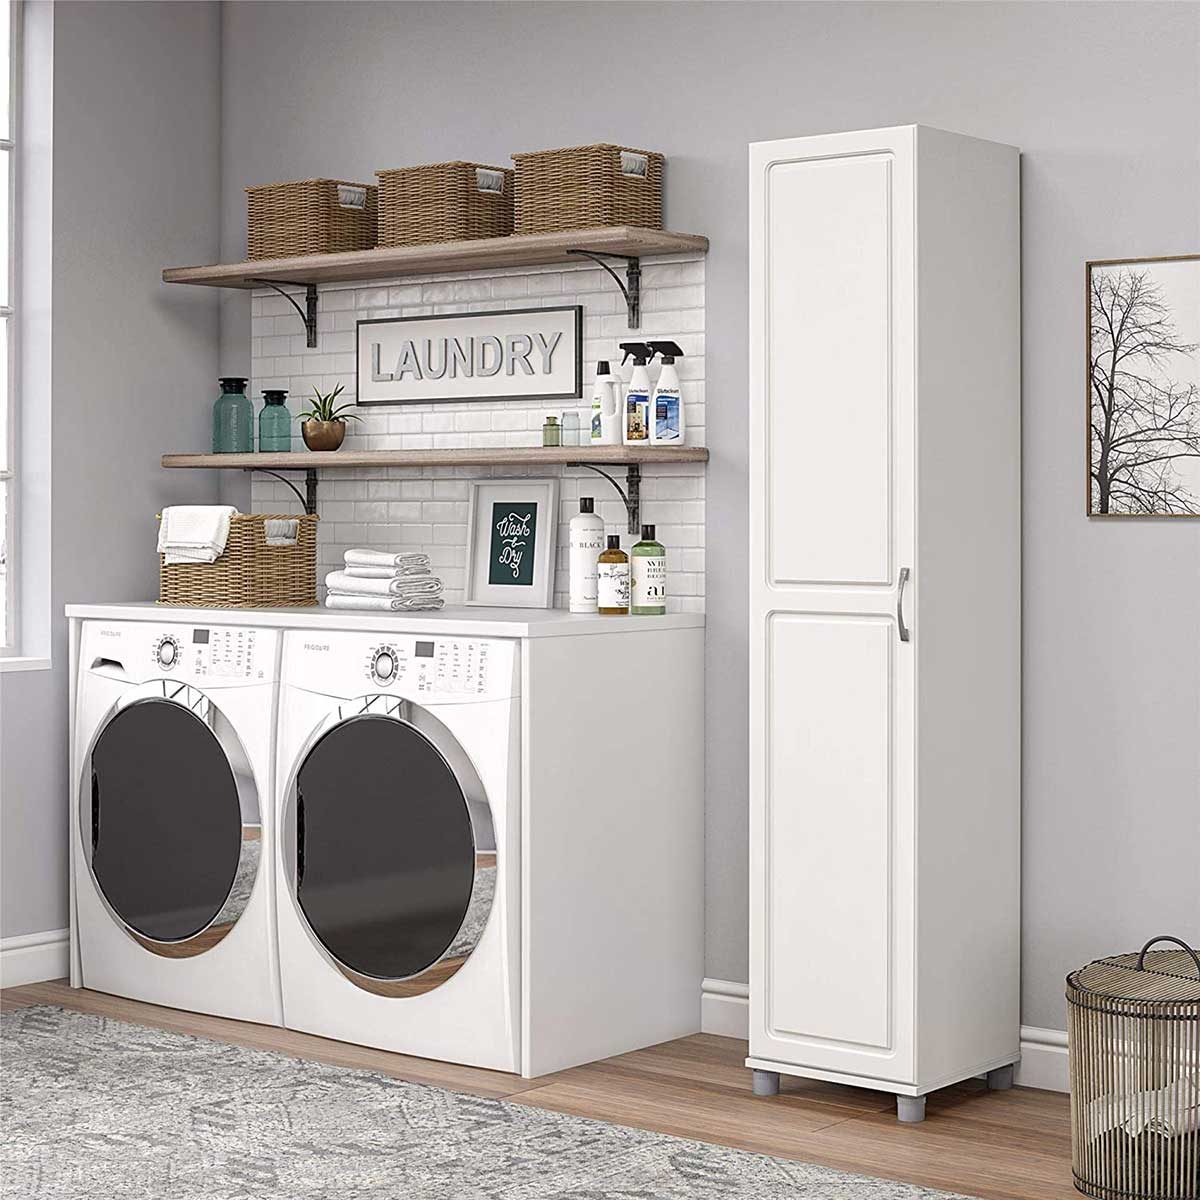 8 Best Laundry Room Storage The Family Handyman